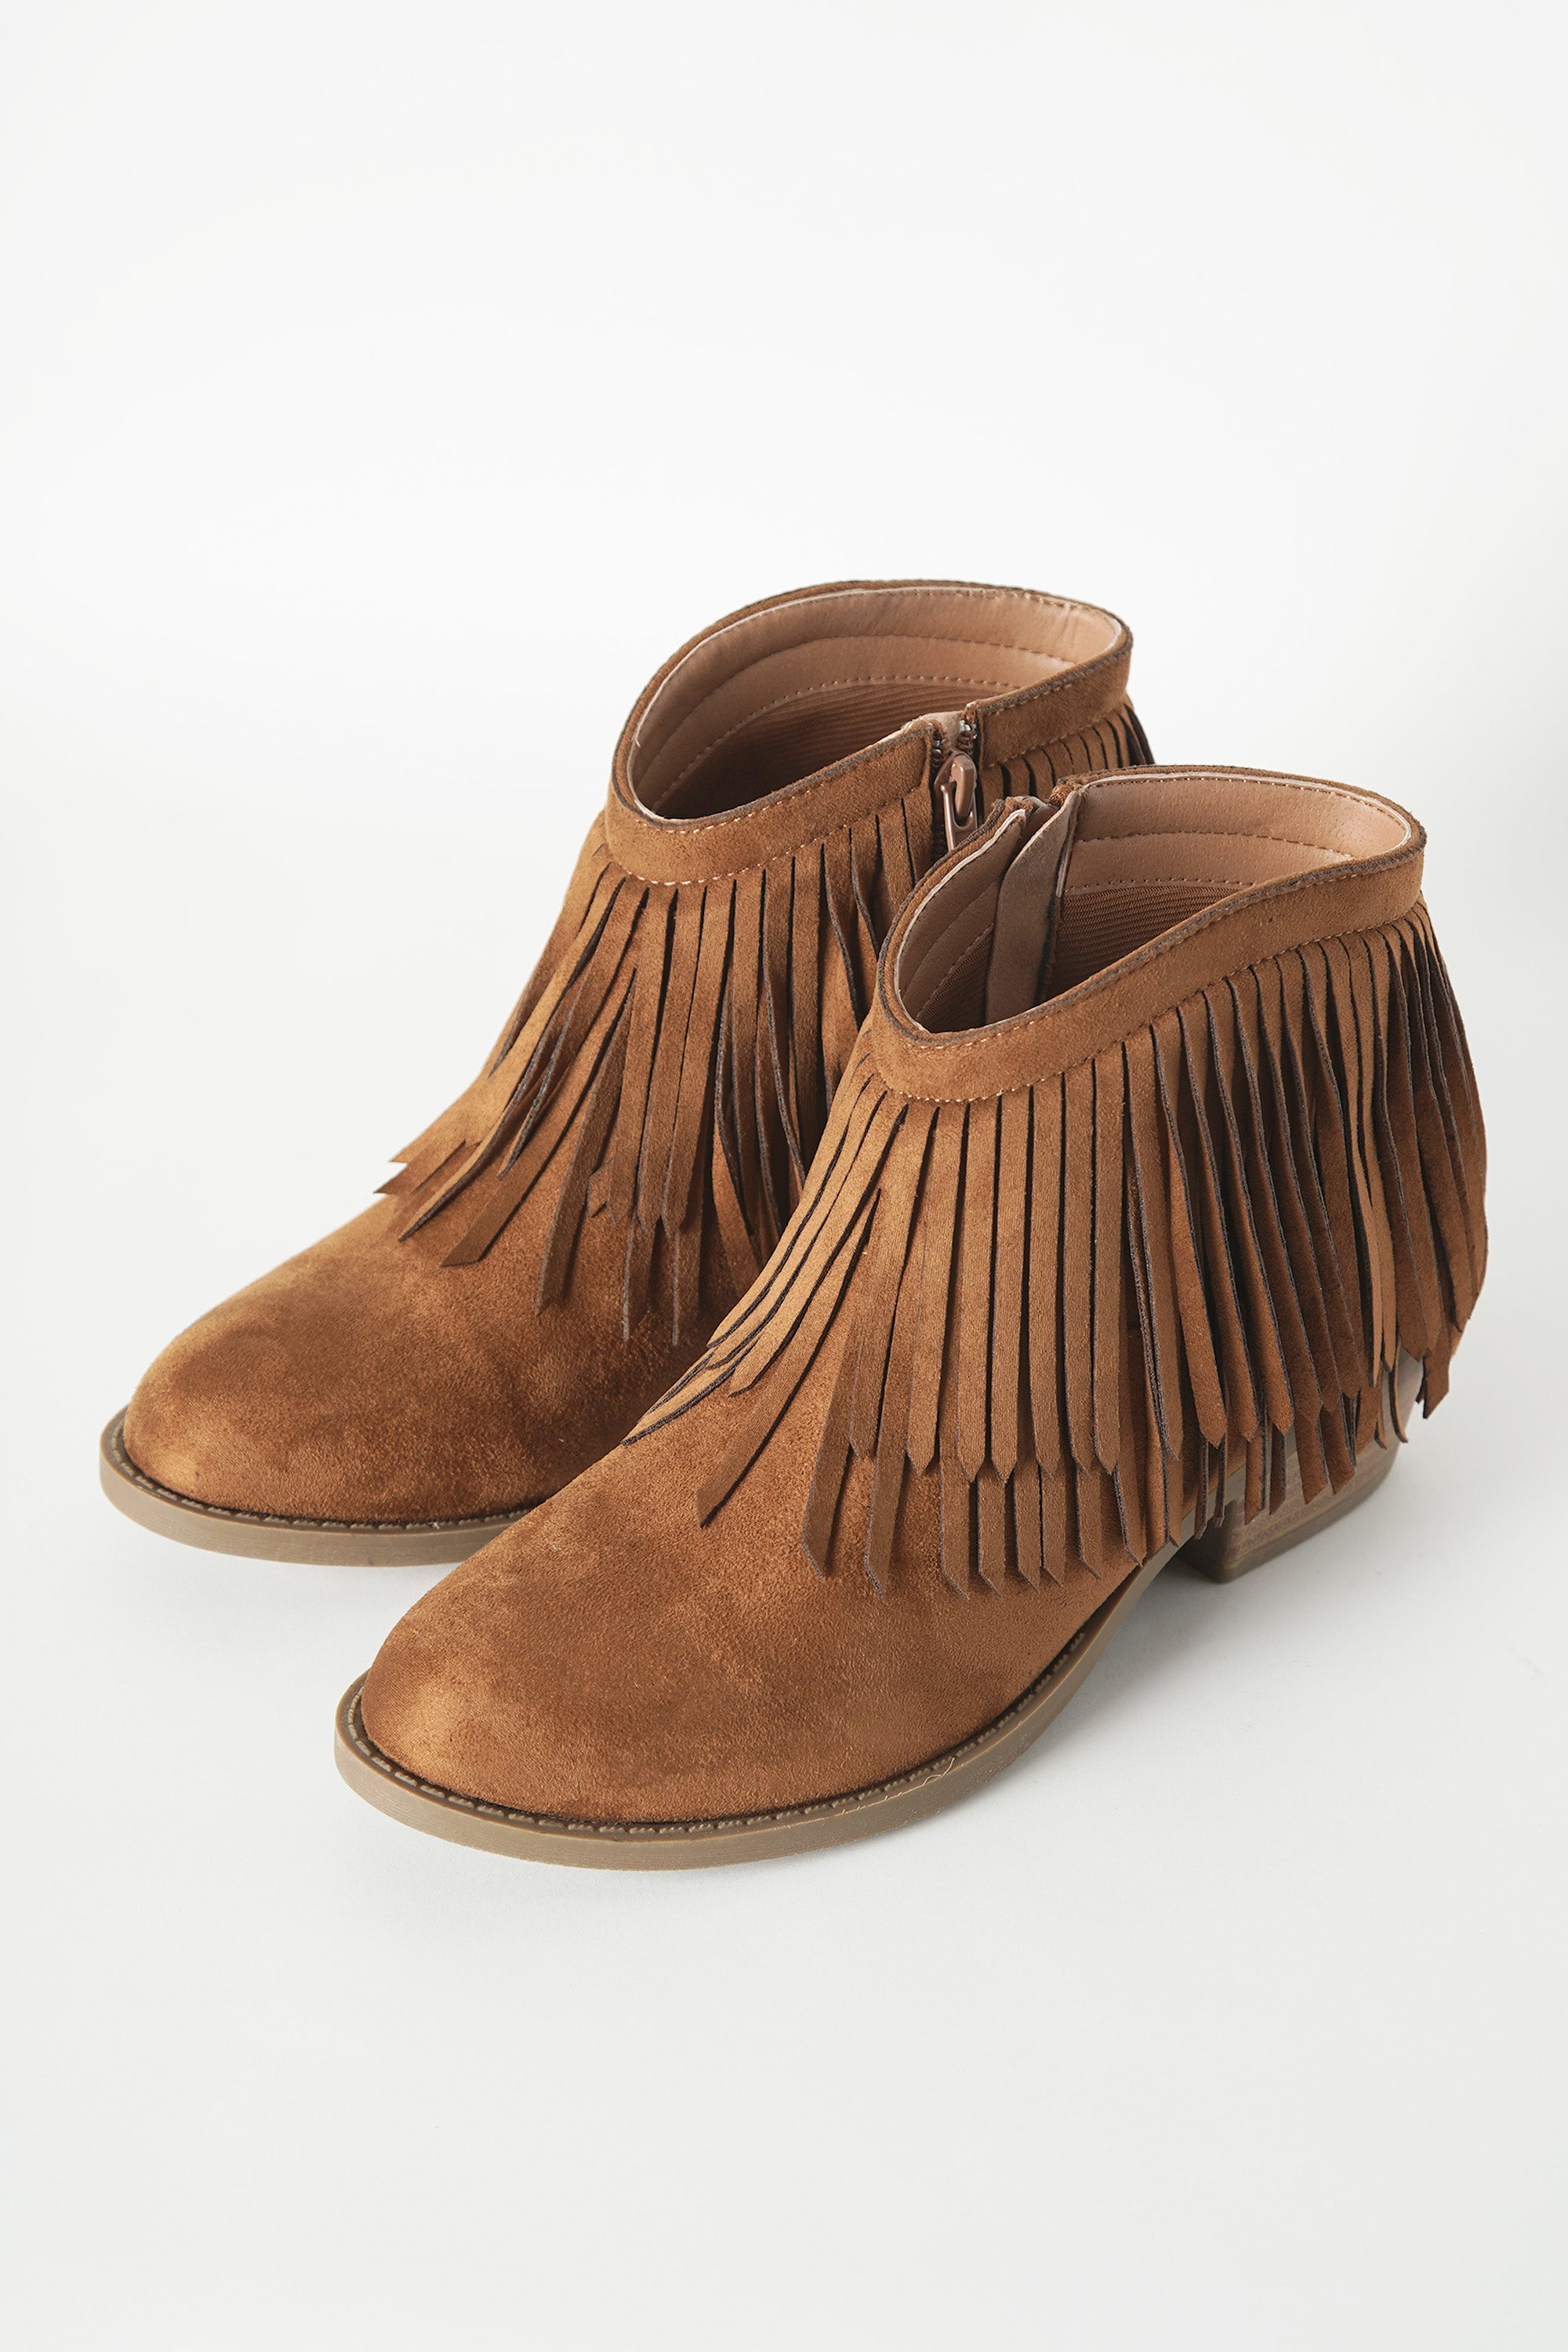 Western Fringe Ankle Boots